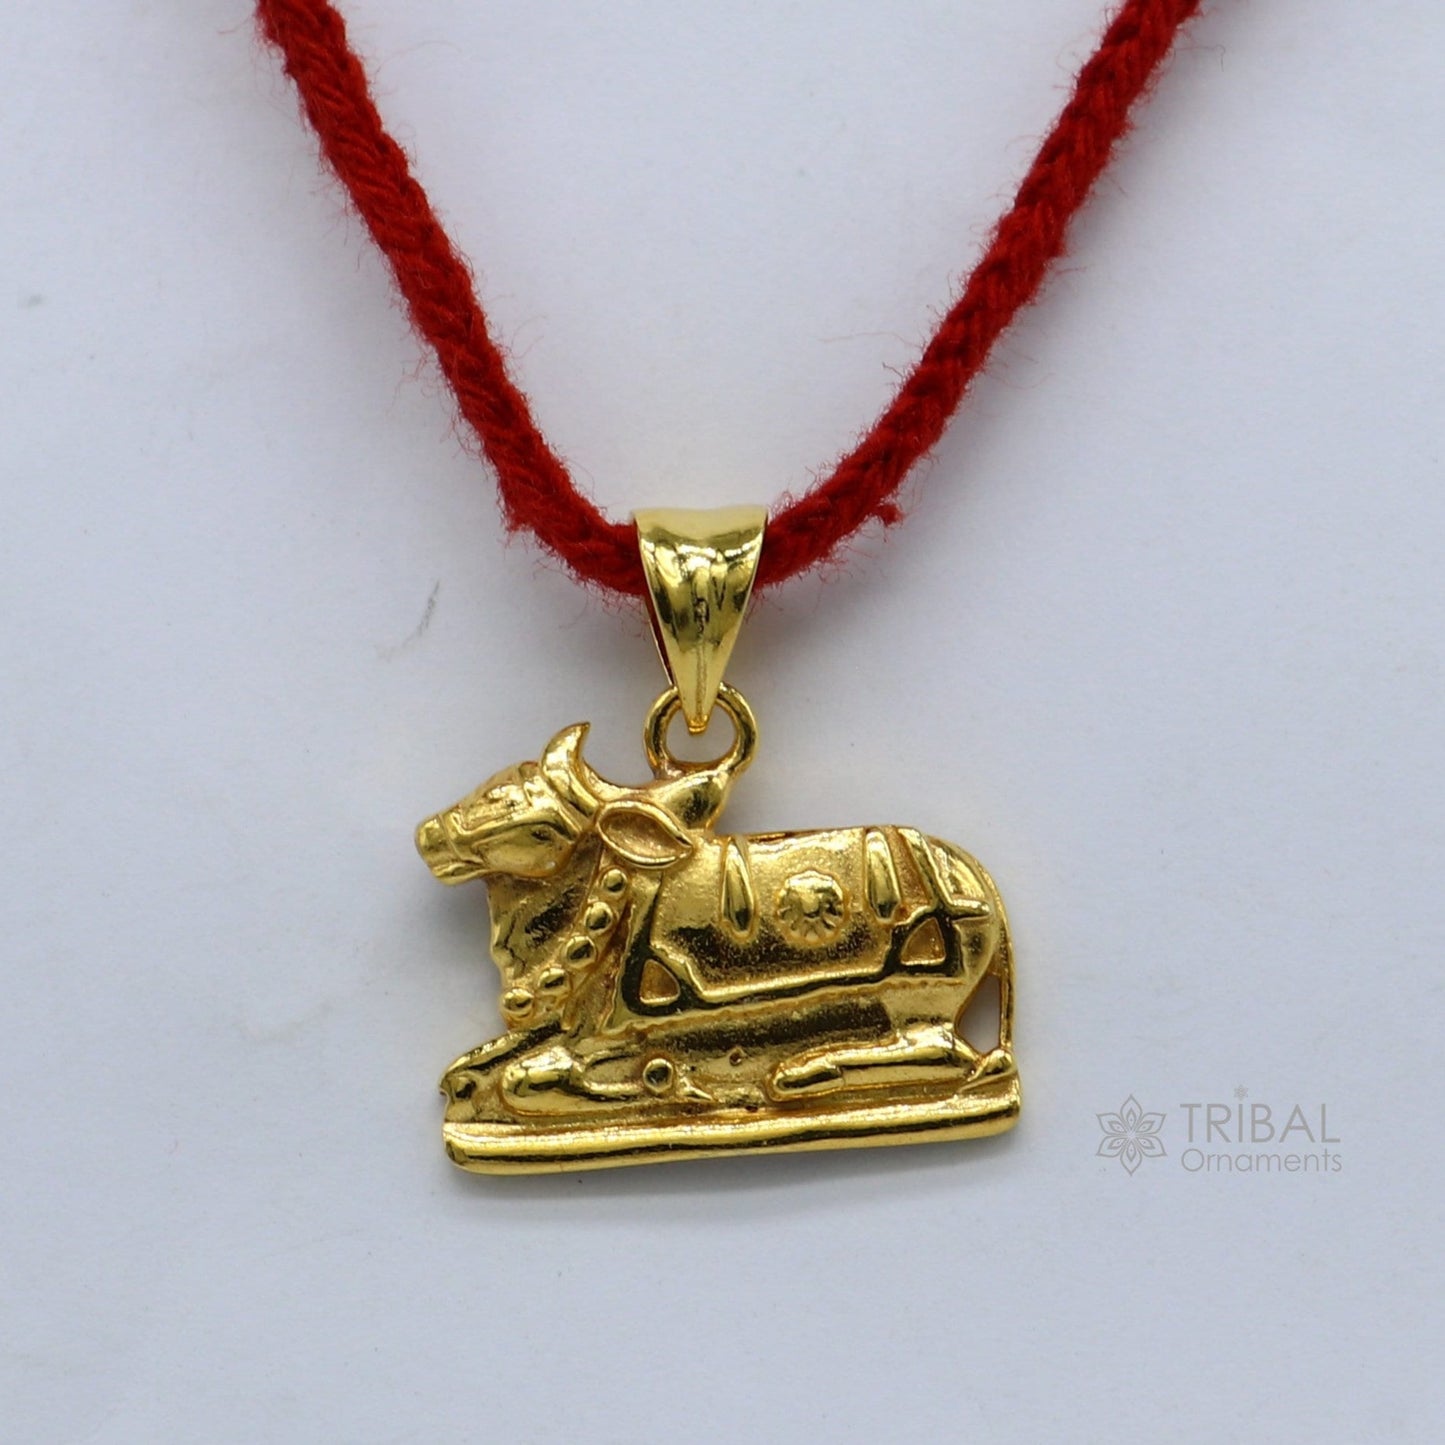 925 sterling silver amazing designer Hindu idol Lord Shiva Nandi Maharaj pendant, excellent gold polished unisex locket pendant nsp612 - TRIBAL ORNAMENTS